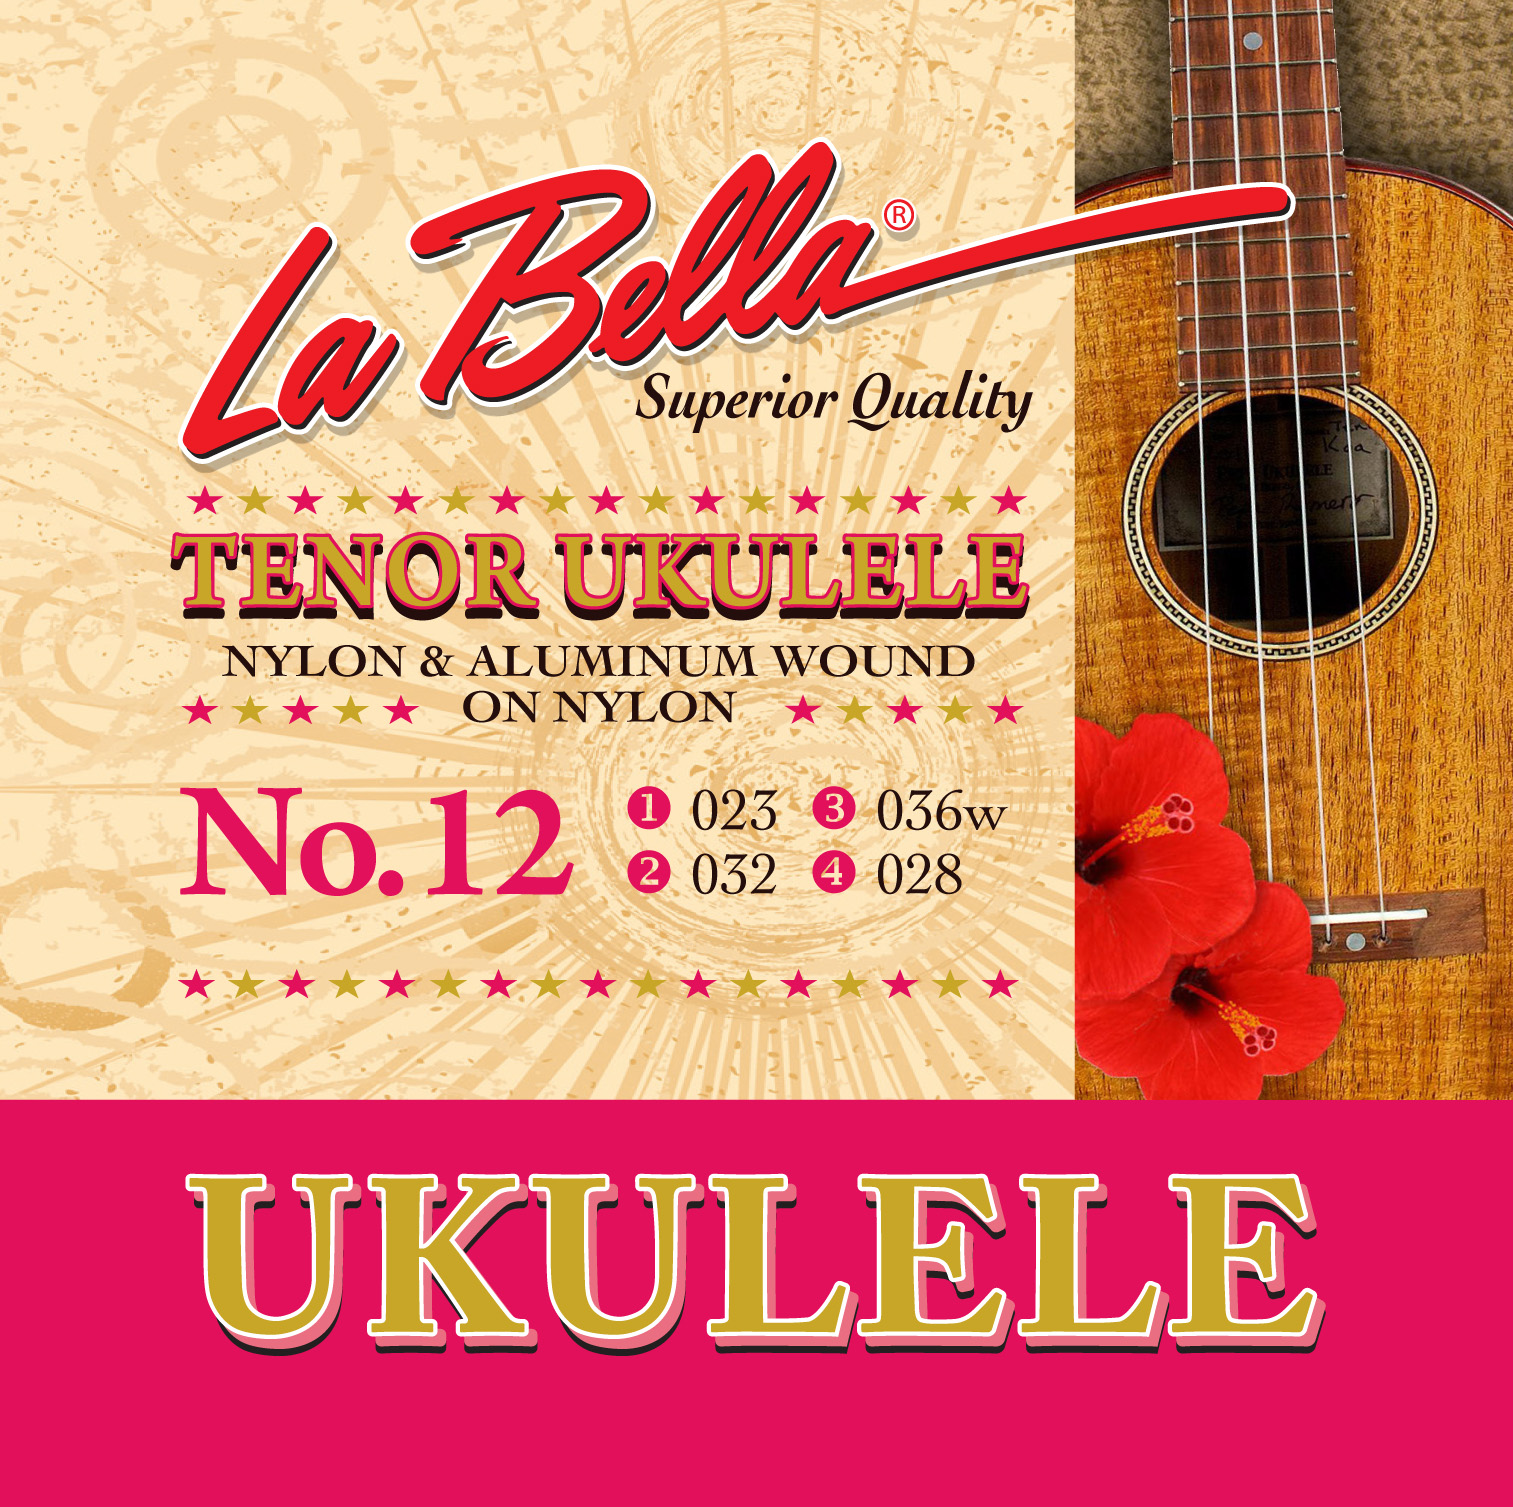 LA BELLA Ukulele 12. 023-032-036w-028, чистый нейлон. Струны для укулеле тенор 